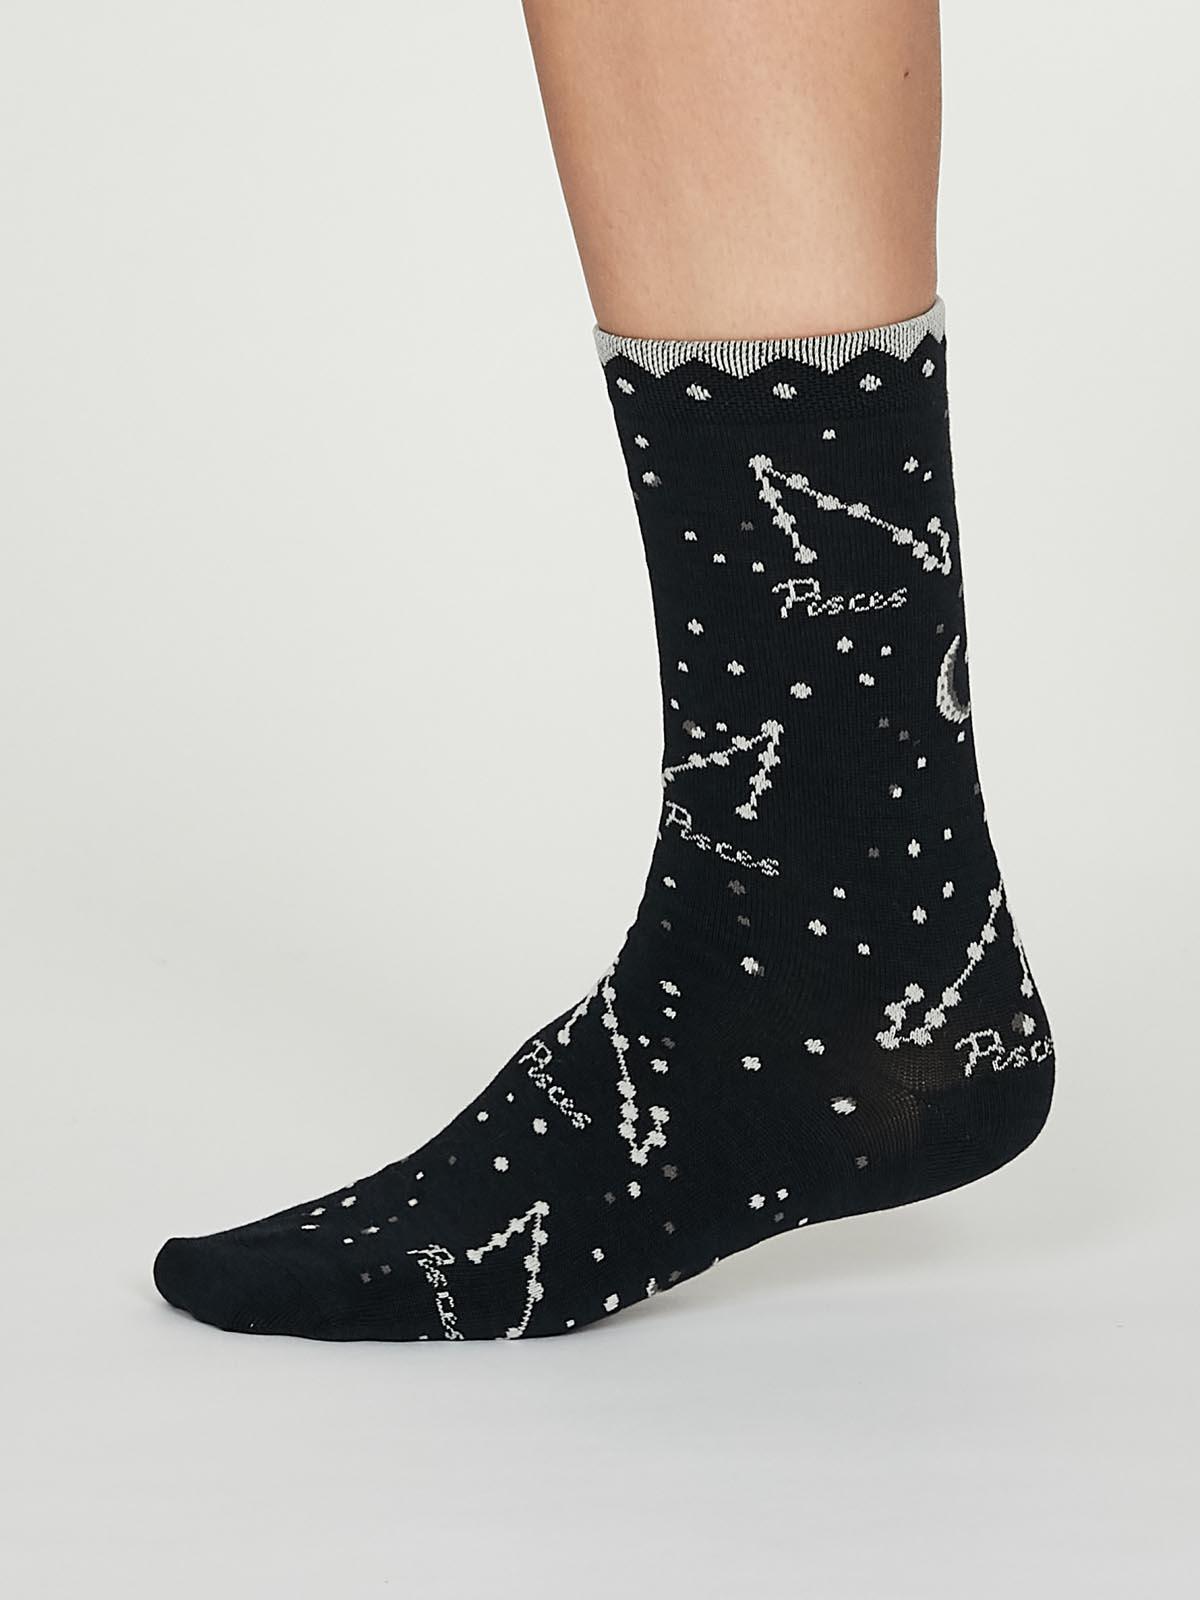 Pisces Zodiac Bamboo Organic Cotton Horoscope Star Sign Socks - Thought Clothing UK